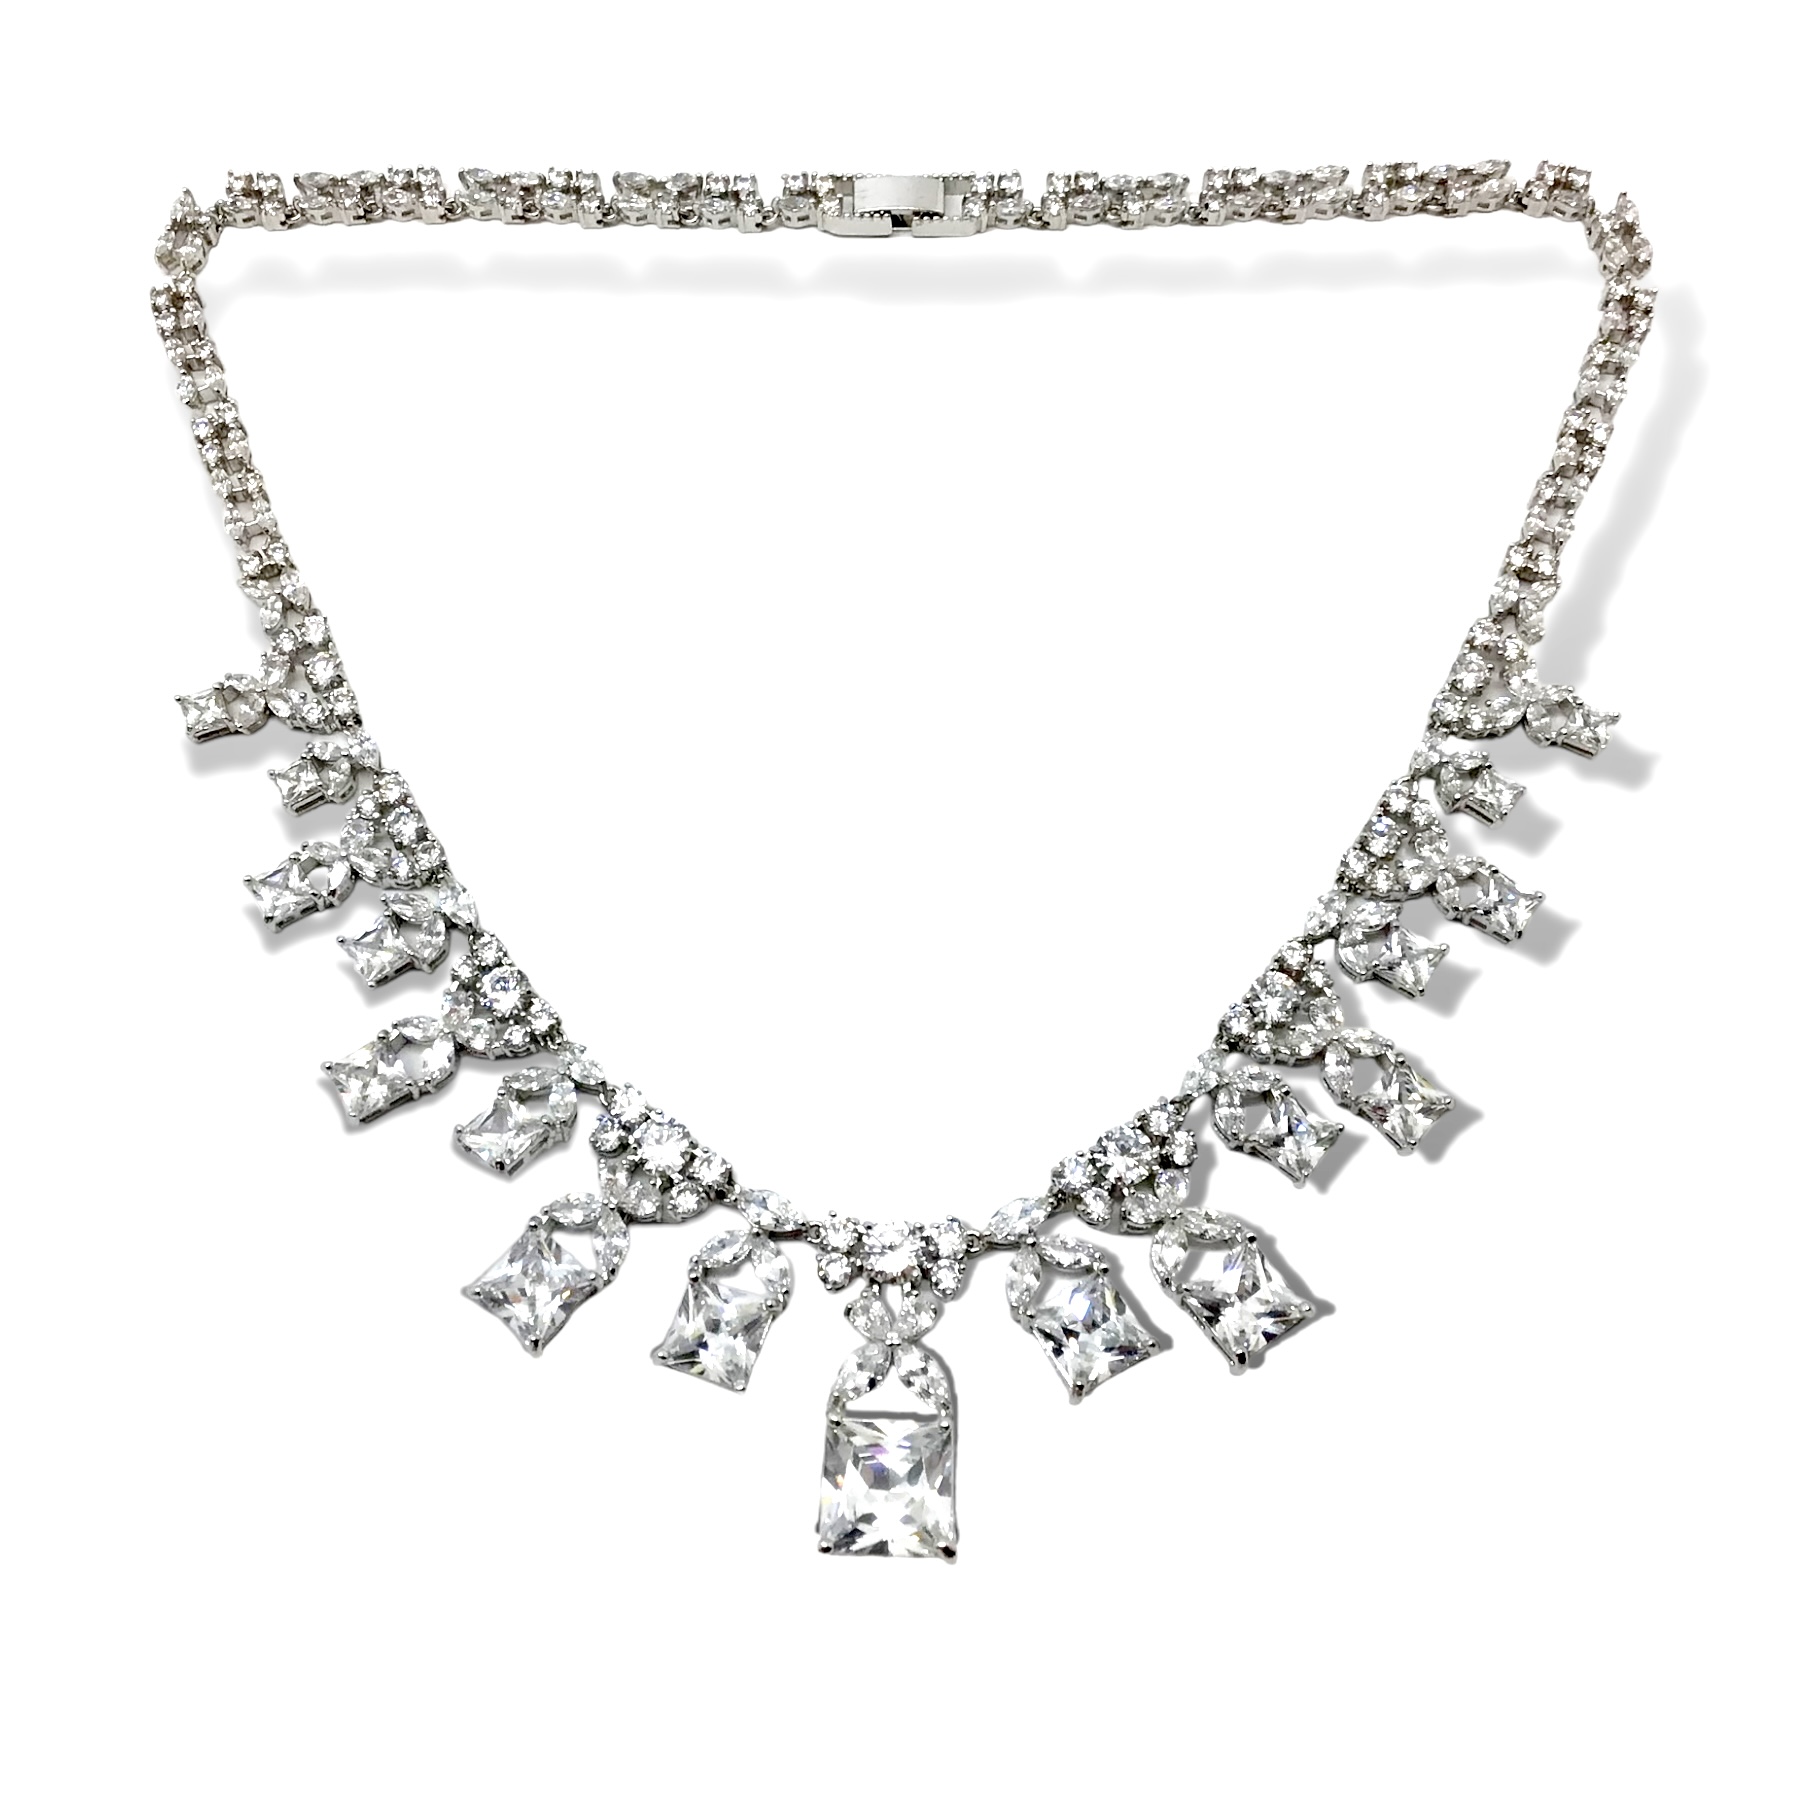 swarovski necklace| Brielle I Jeanette Maree|Shop online now